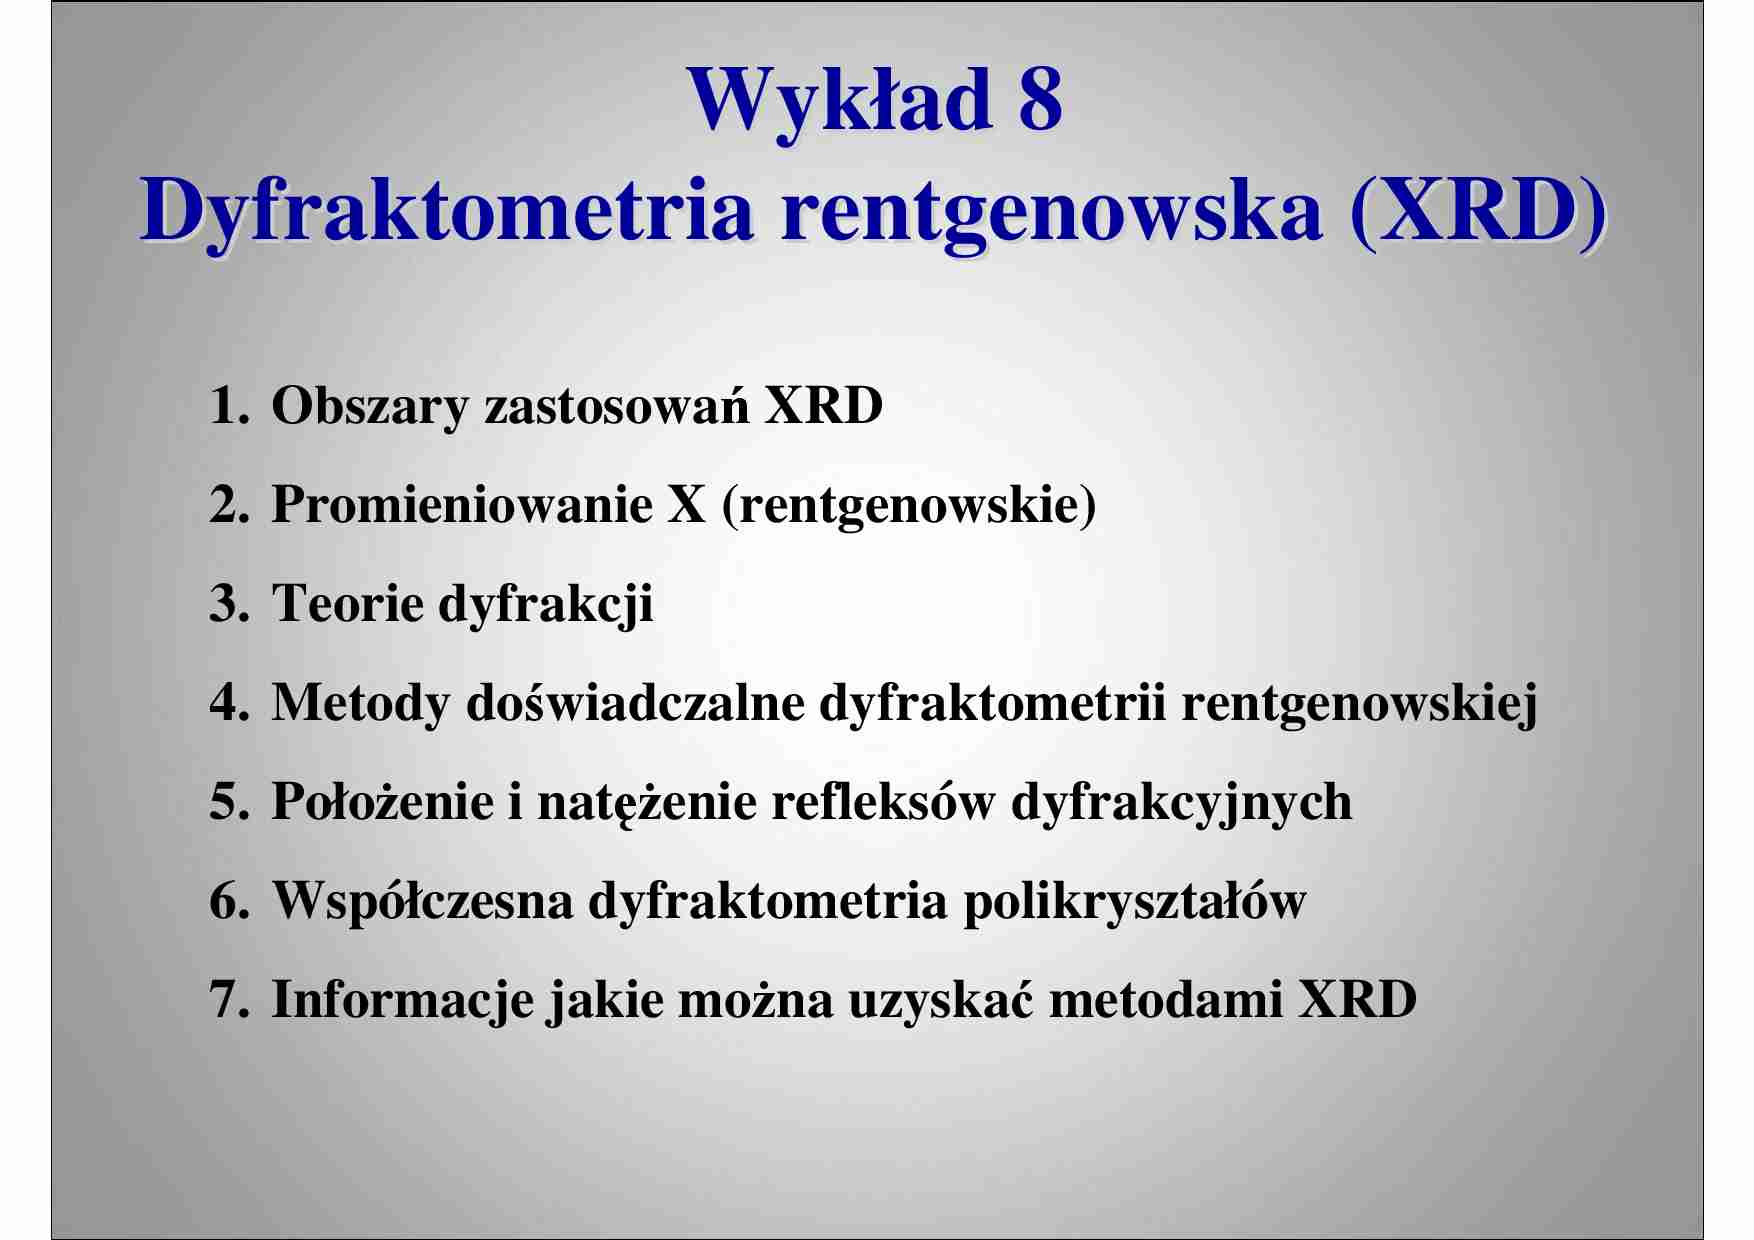 Dyfraktometria rentgenowska - strona 1